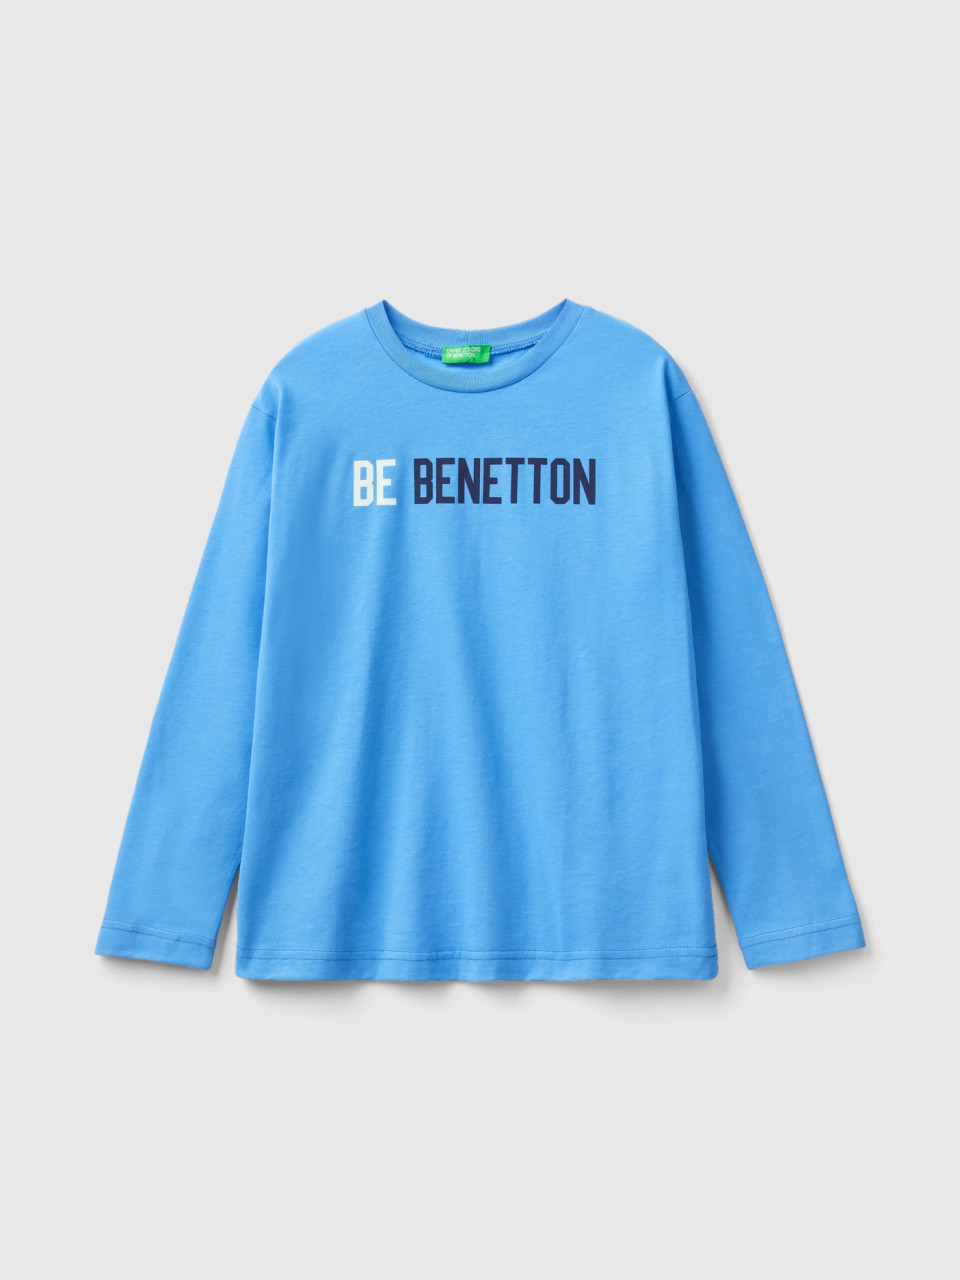 Benetton, Warm T-shirt With Logo Print, Blue, Kids